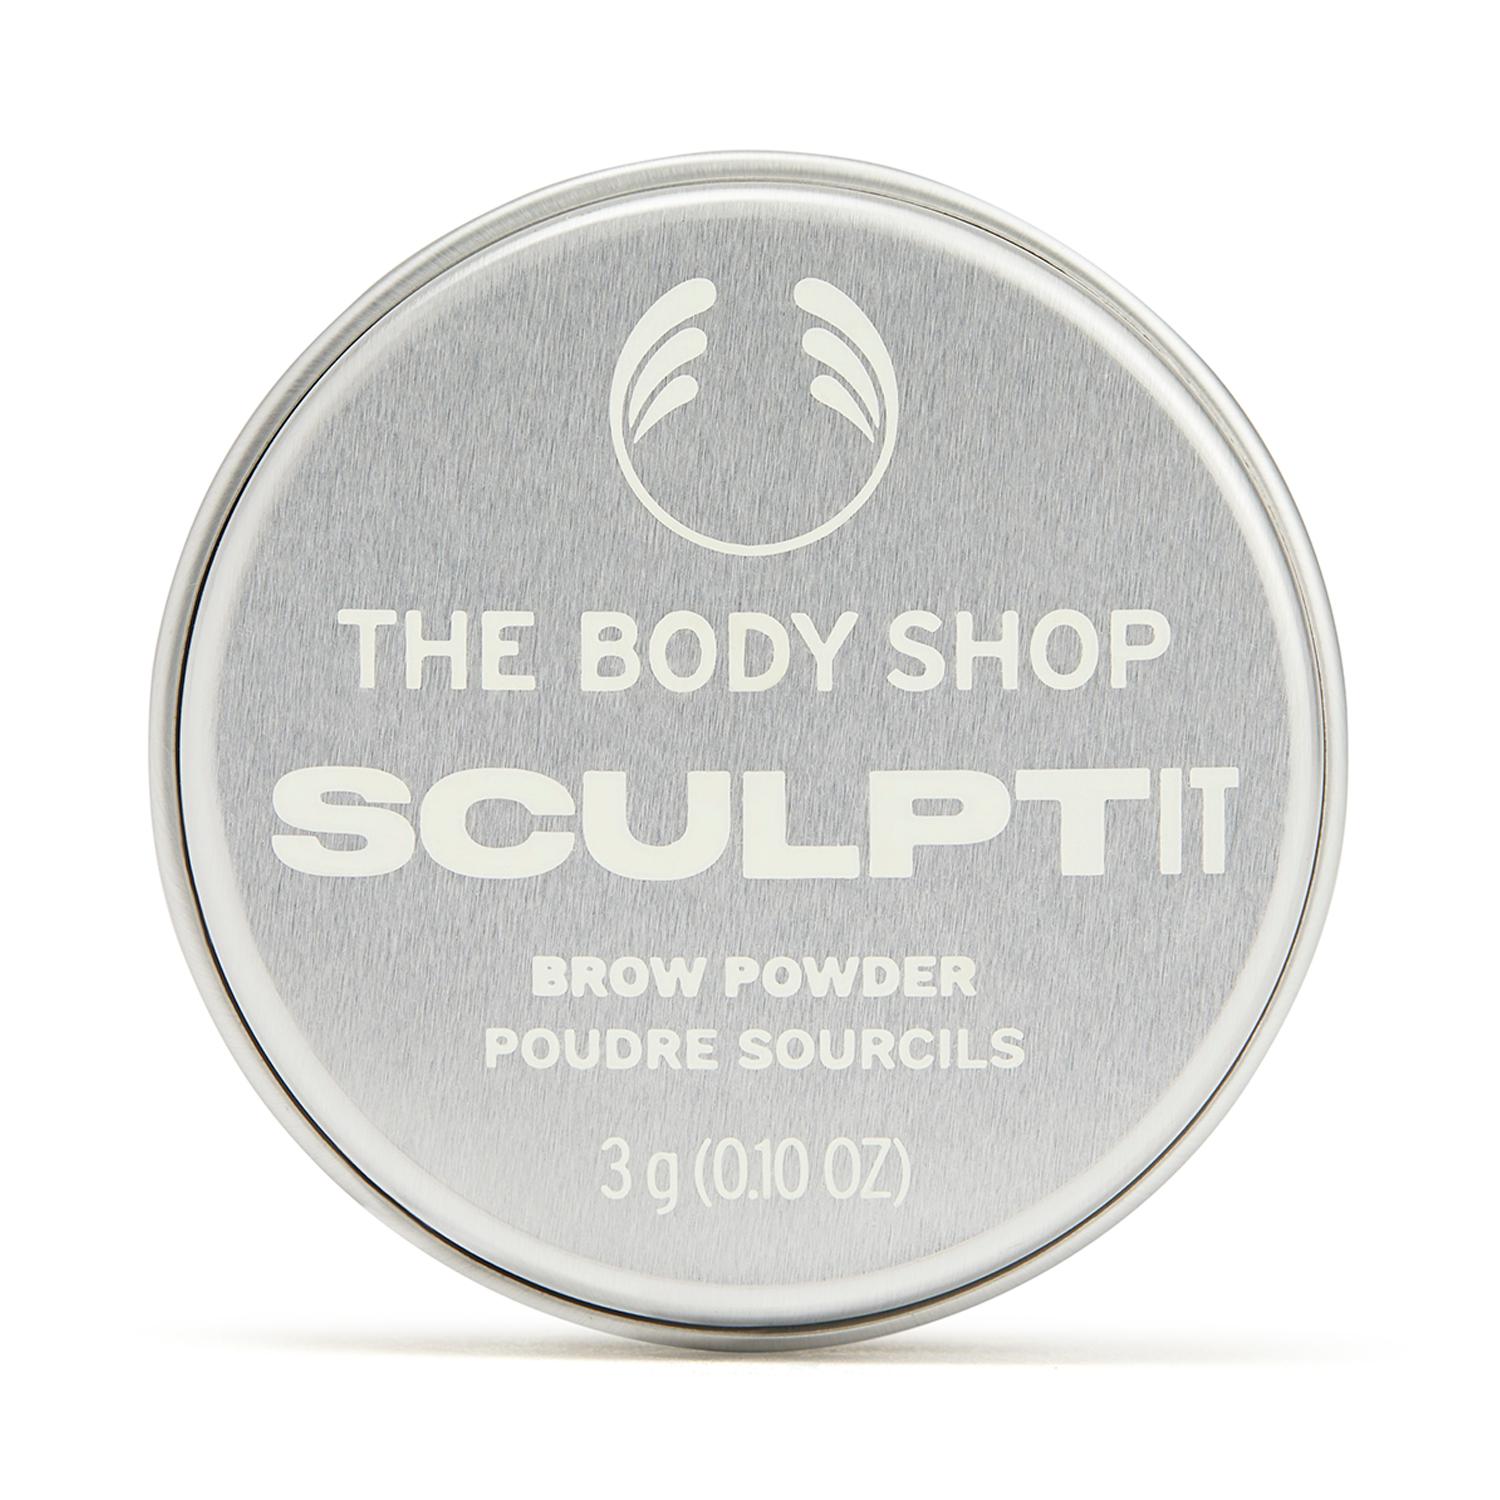 The Body Shop Sculpt It Brow Powder - Cool Brown (3 g)